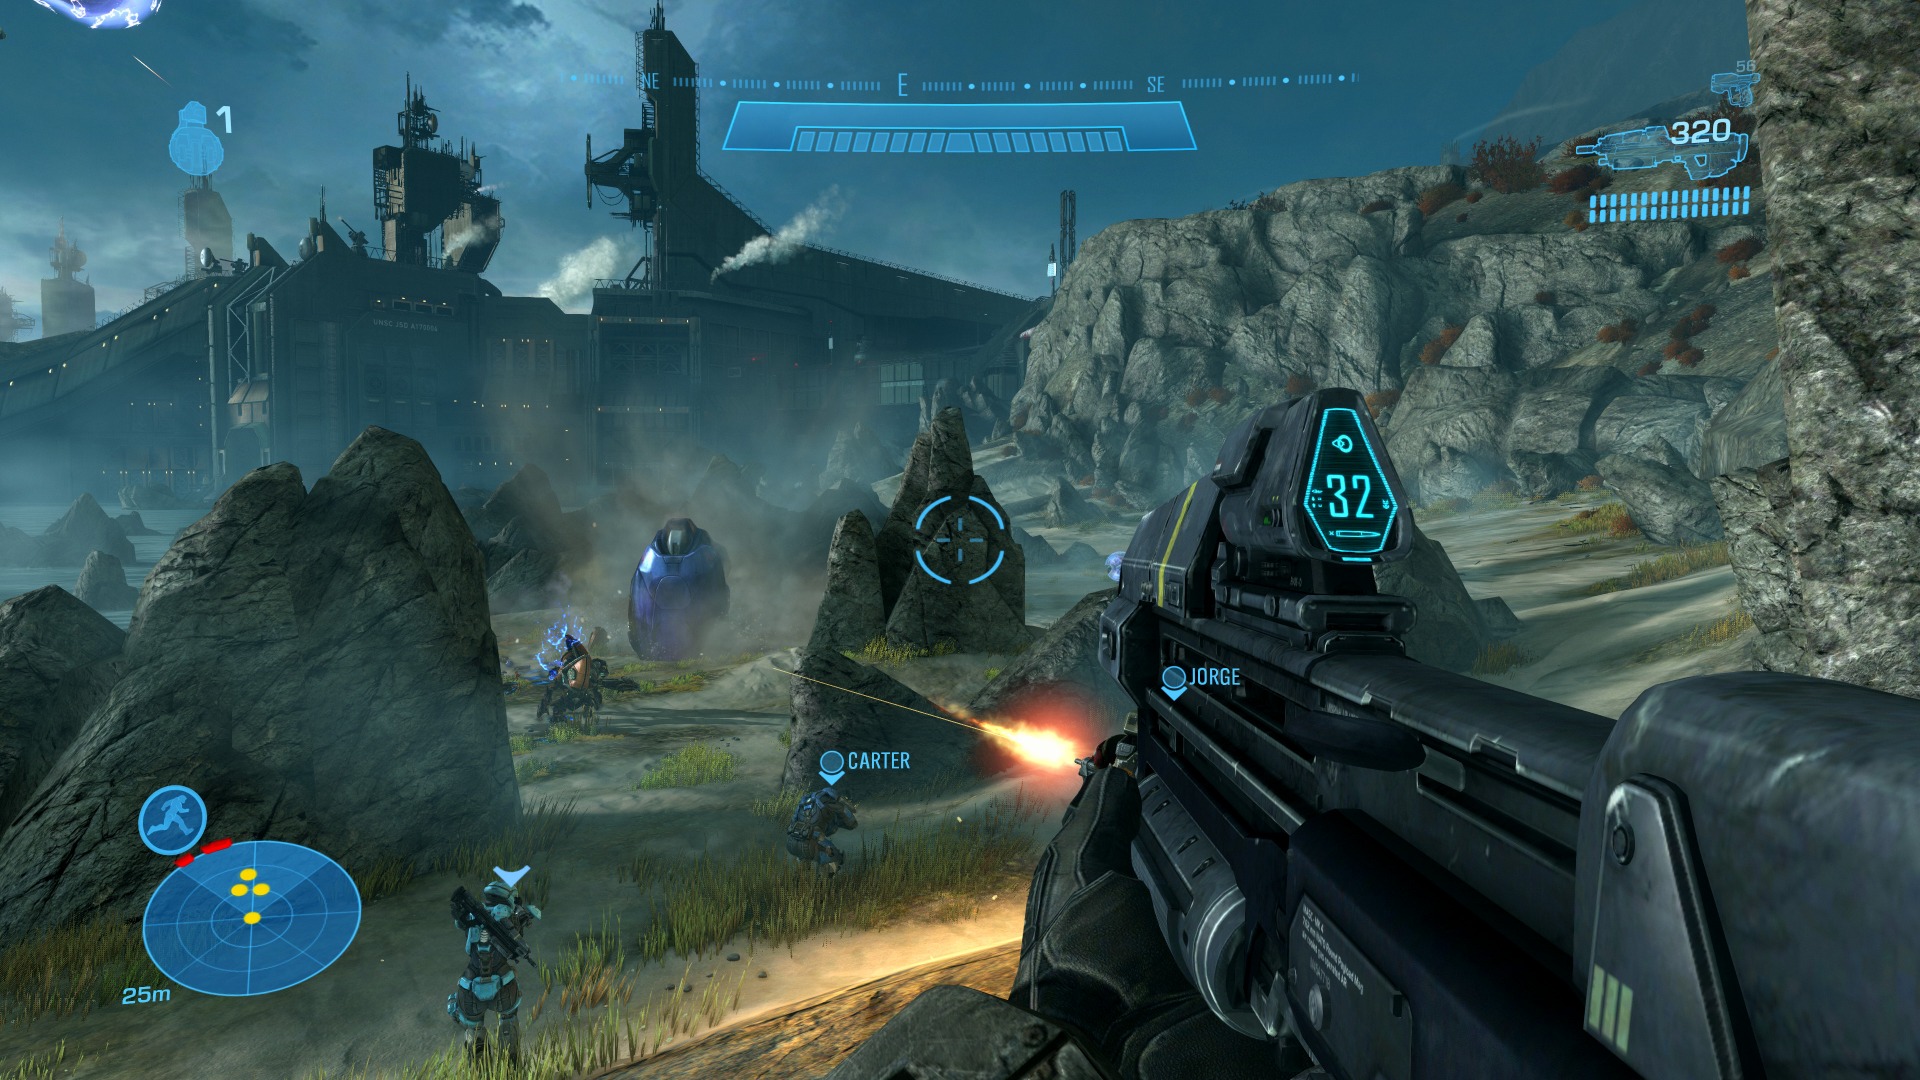 Pc Xbox One版 Halo Reach がついに発売 Steamでは同時接続数が15万人を超え Counter Strike Global Offensive と Dota 2 に次ぐ第3位に 19年12月4日 Biglobeニュース